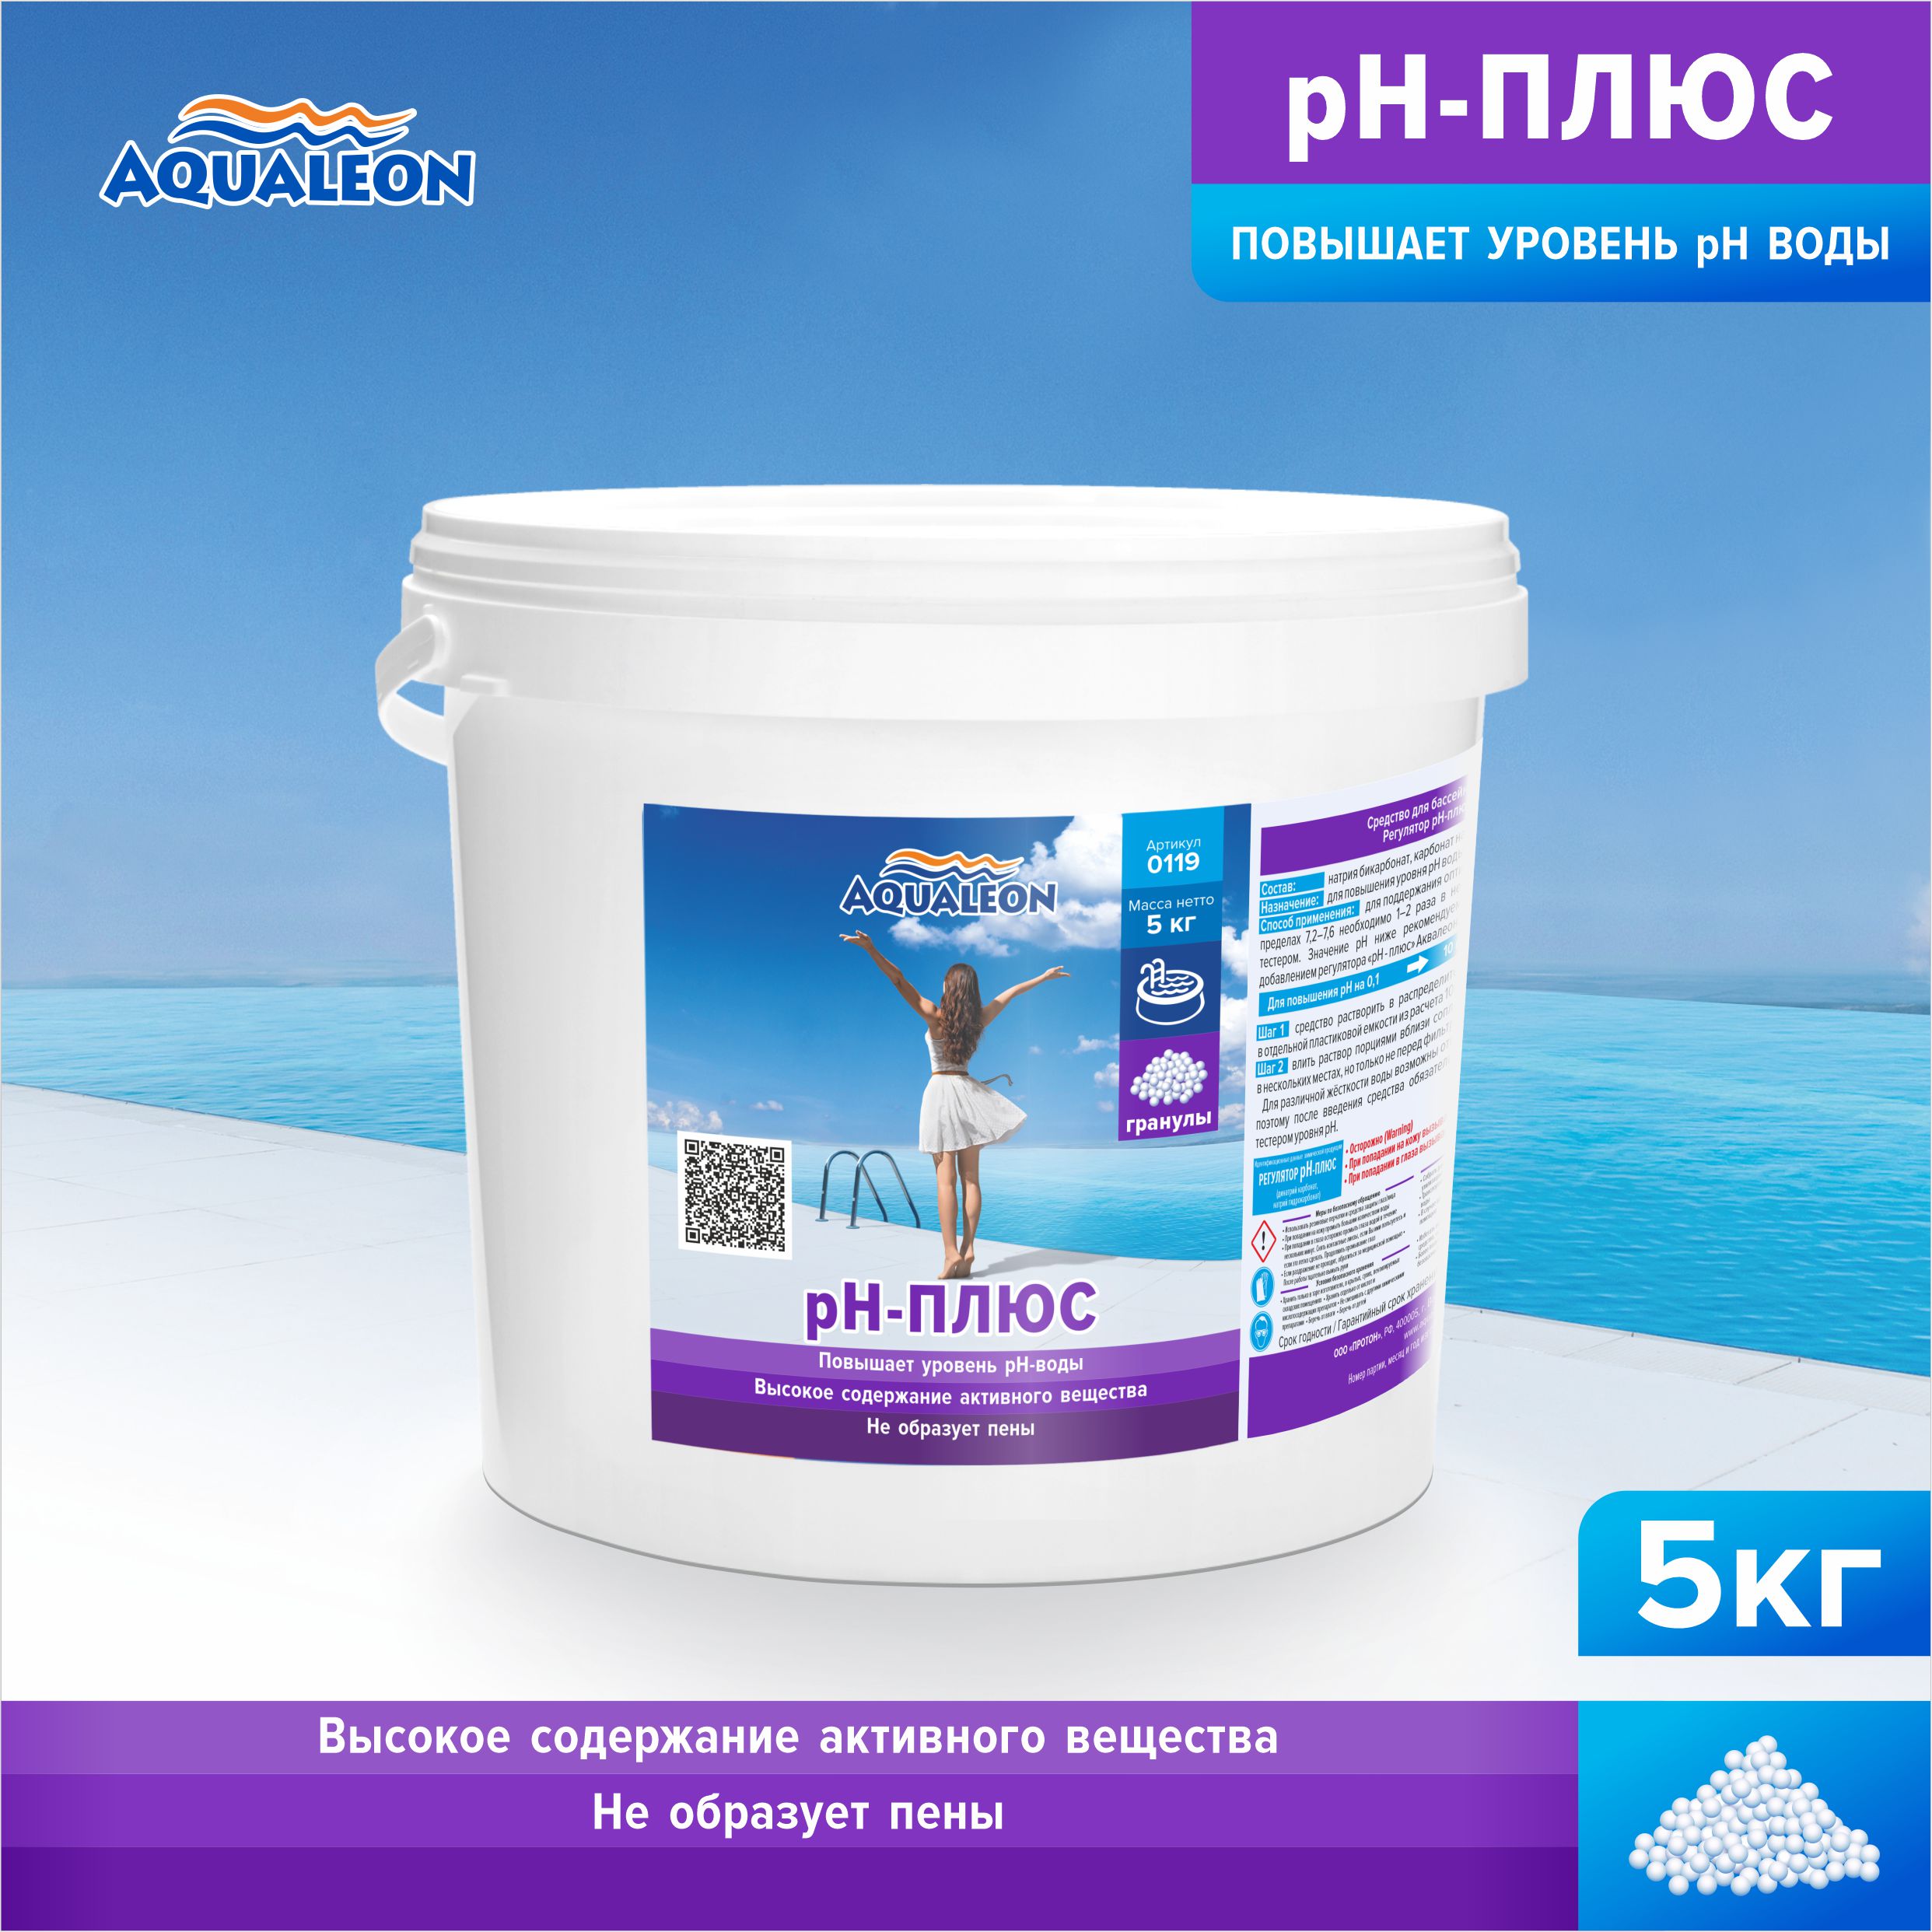 pH-плюс Aqualeon в гранулах 5 кг, арт. 0119